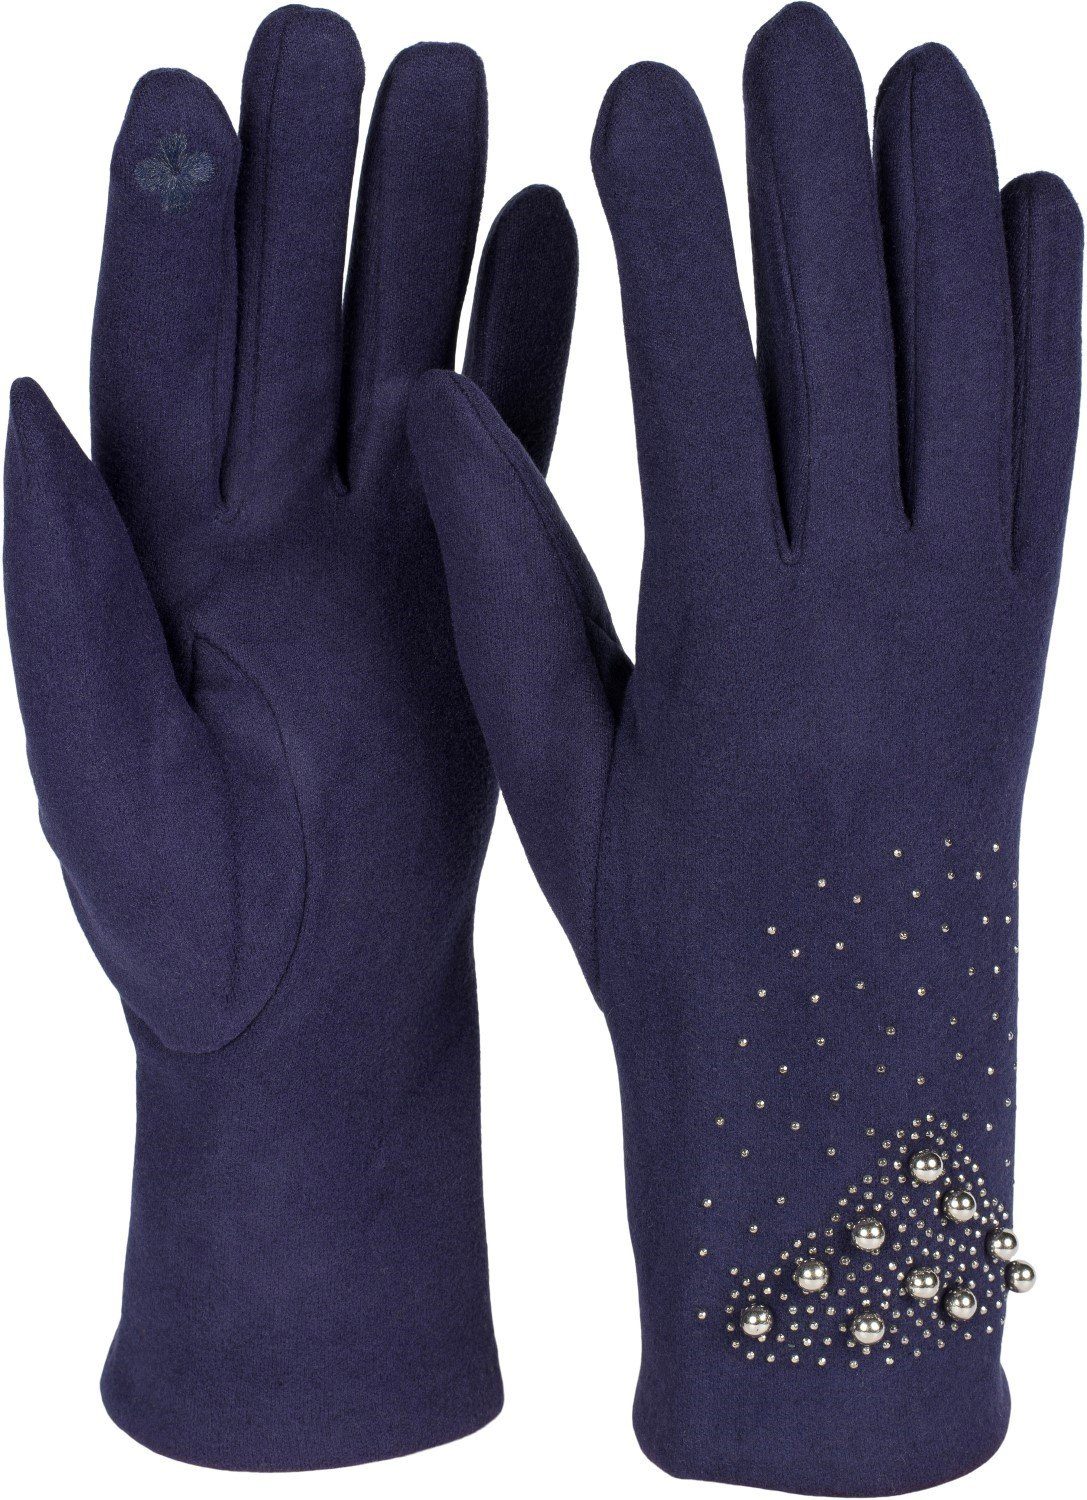 styleBREAKER Fleecehandschuhe Touchscreen Handschuhe mit Strass und Perlen Dunkelblau